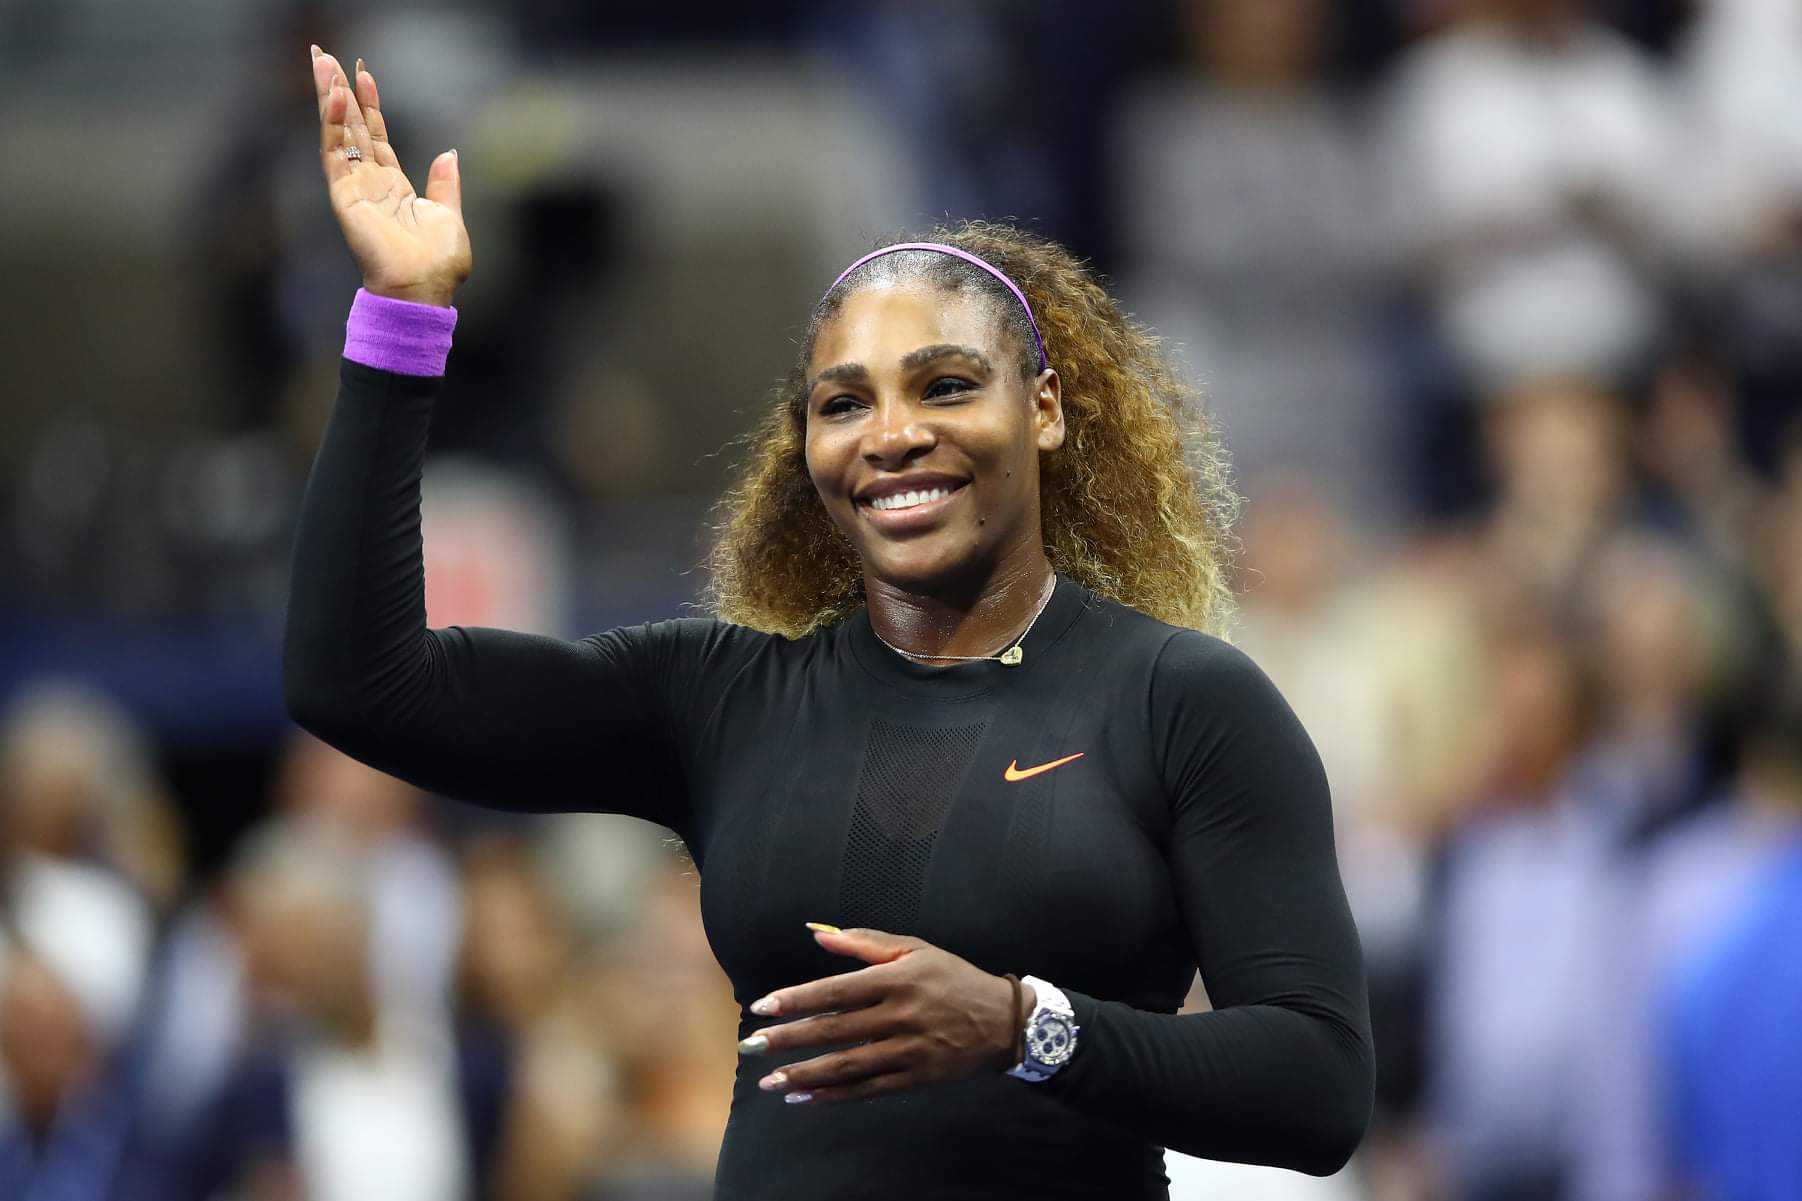 Serena Williams é confirmada pela XP na Expert 2022